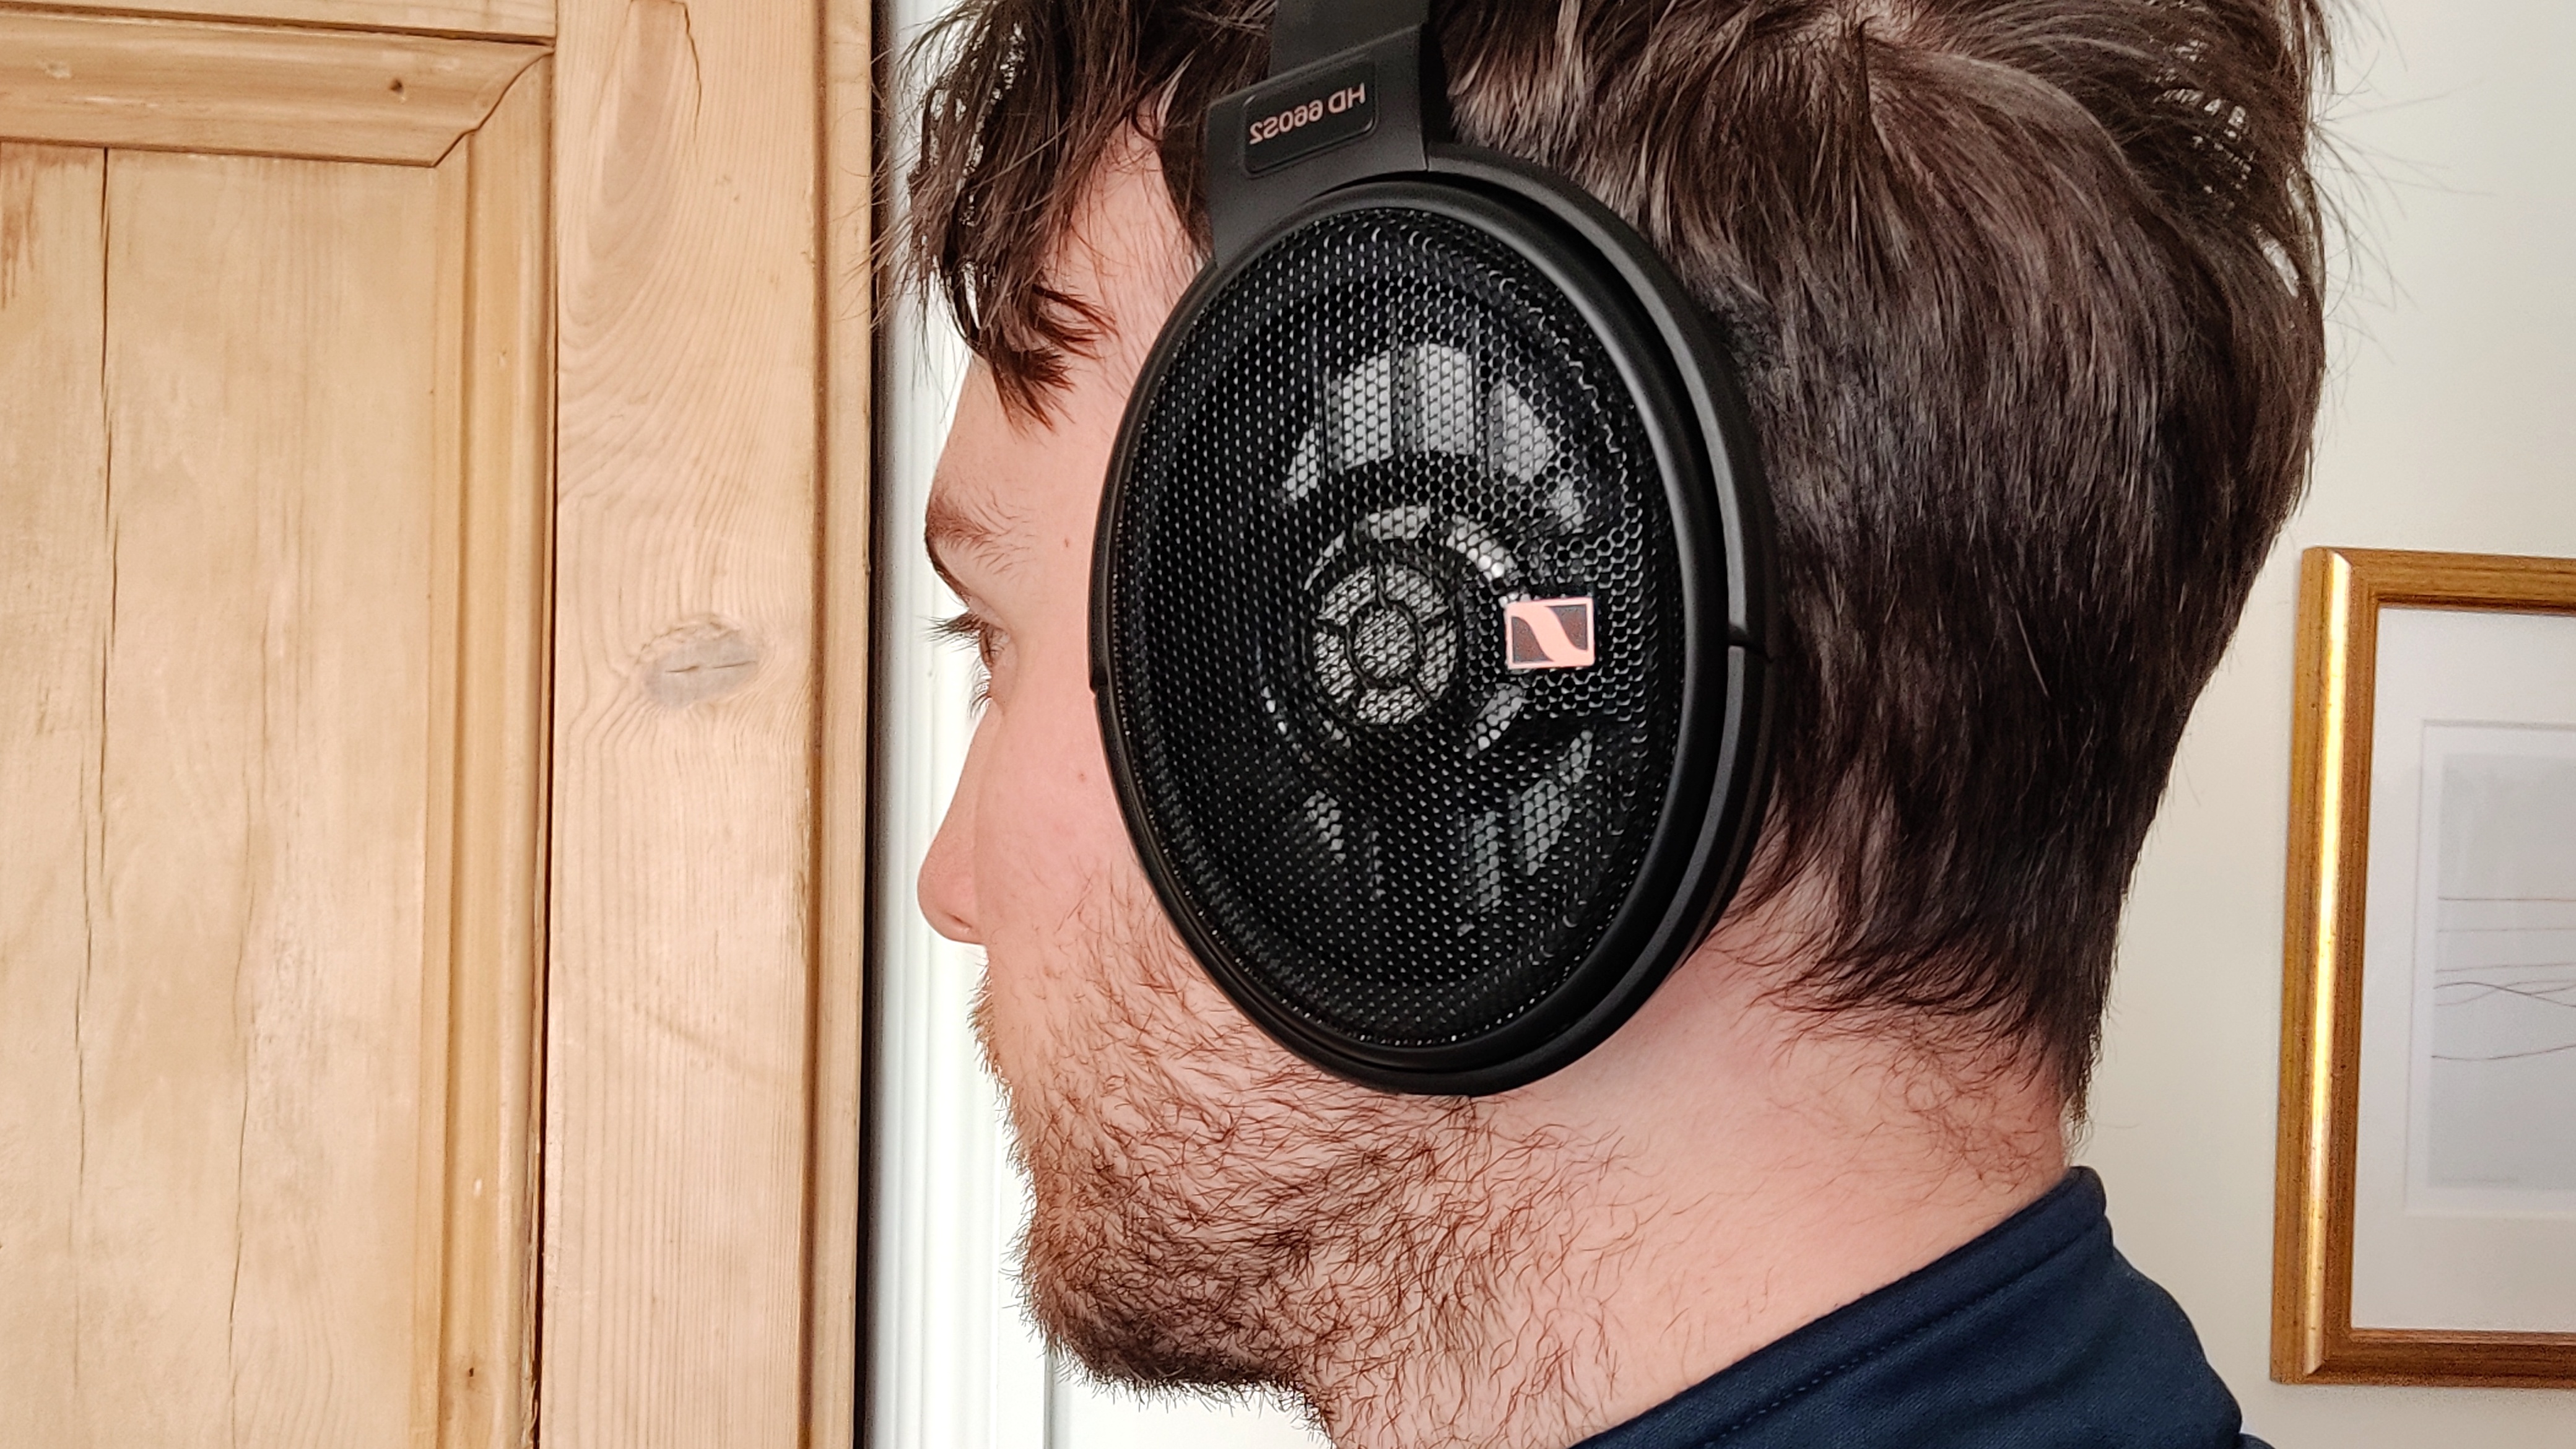 A member of the TechRadar team wearing the Sennheiser HD-660S2 headphones in front of a wooden door.